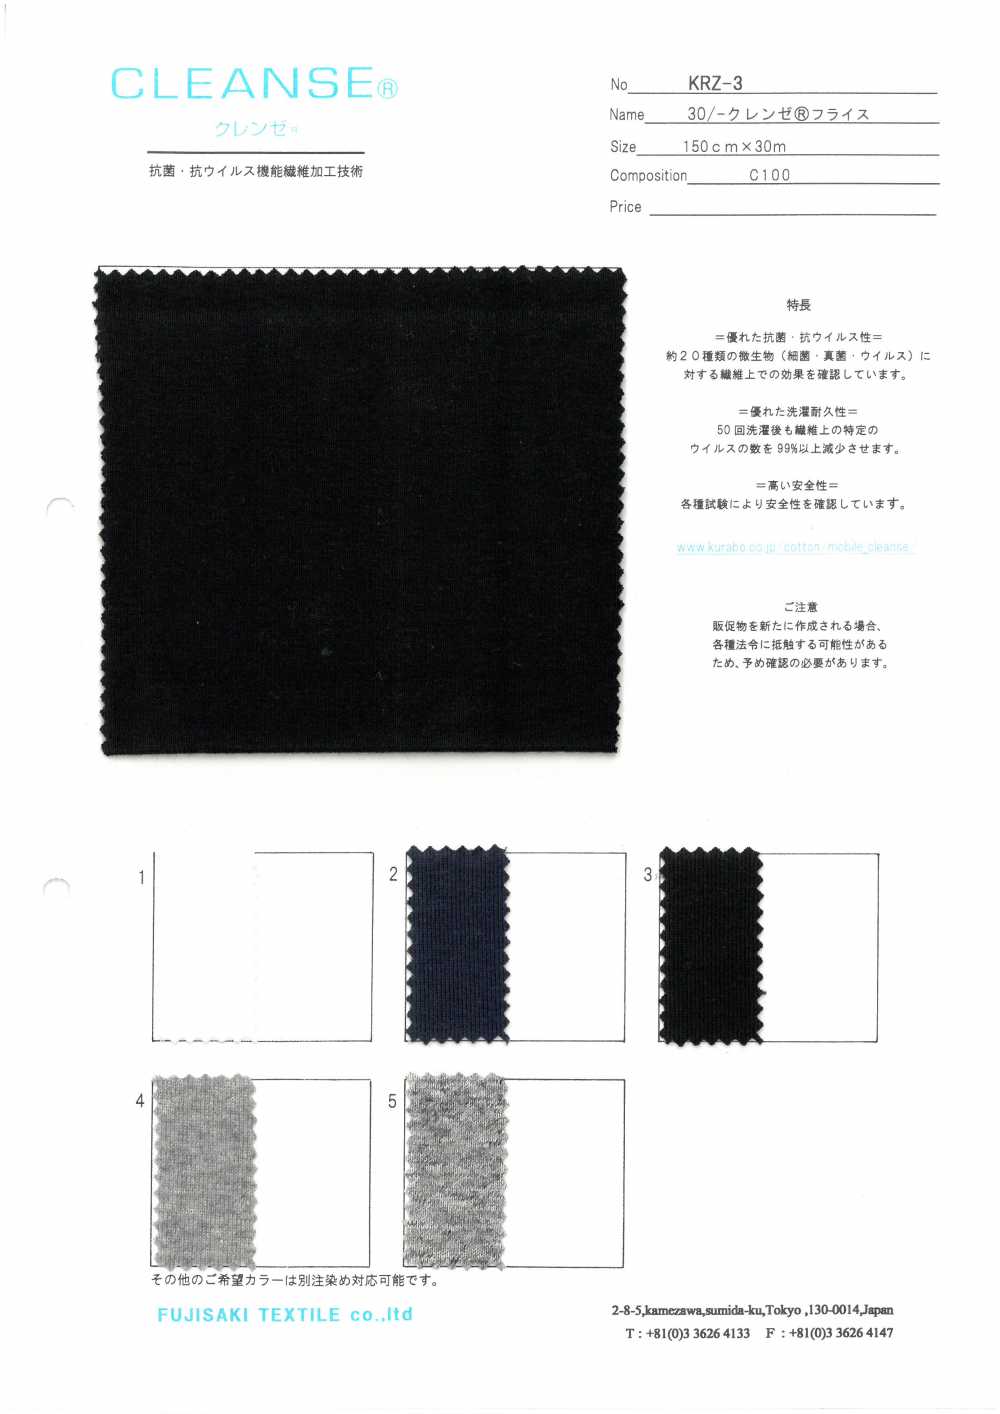 KRZ-3 30 / CLEANSE Rundrippe[Textilgewebe] Fujisaki Textile